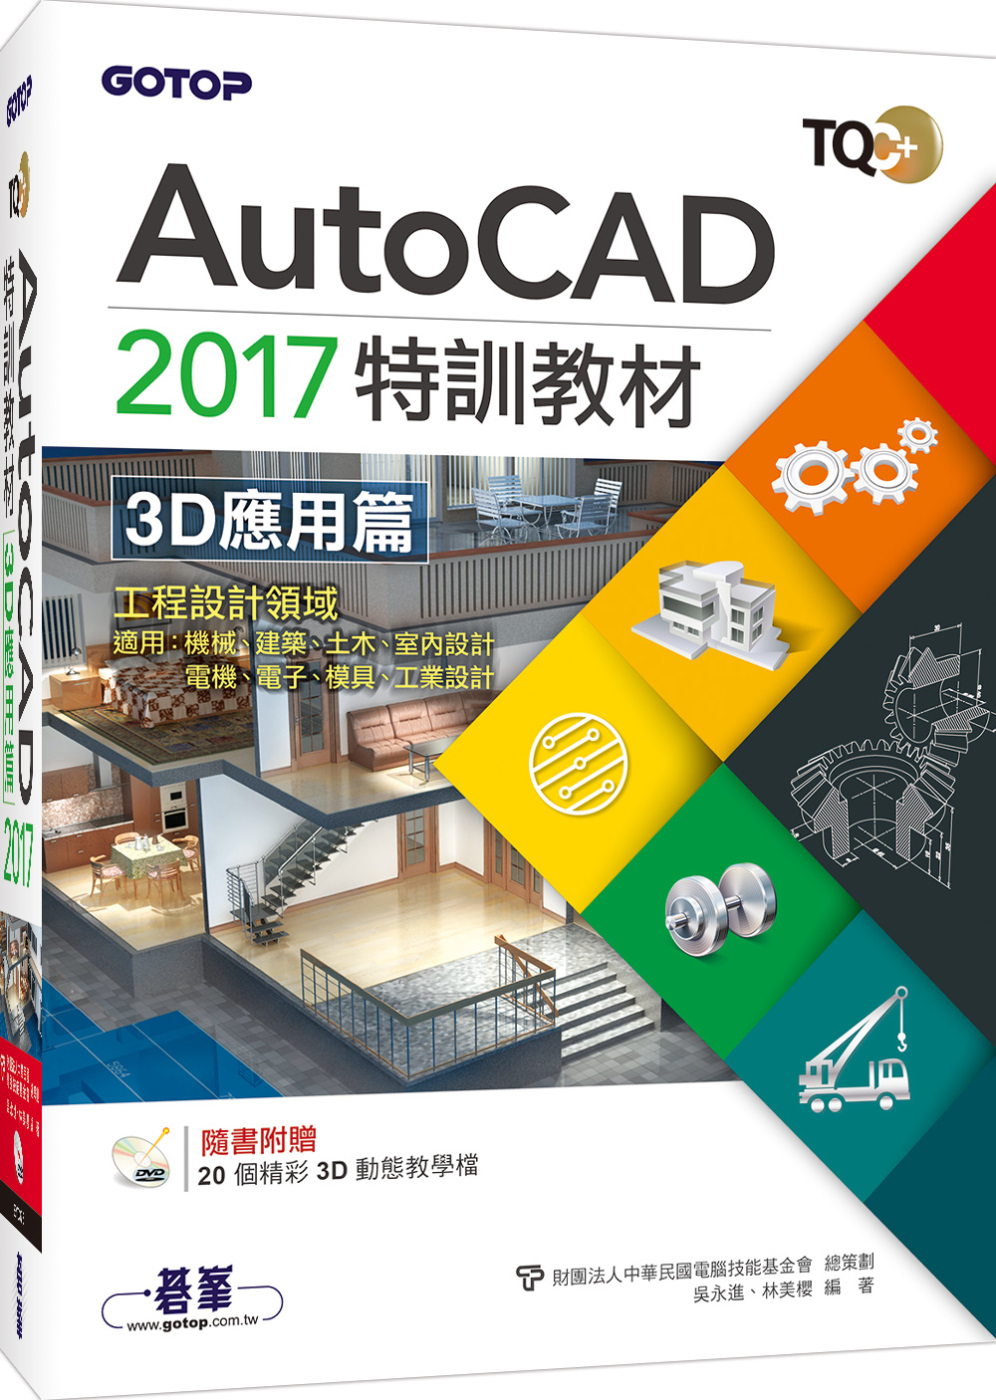 ►GO►最新優惠► 【書籍】TQC+ AutoCAD 2017特訓教材-3D應用篇(附贈20個精彩3D動態教學檔)